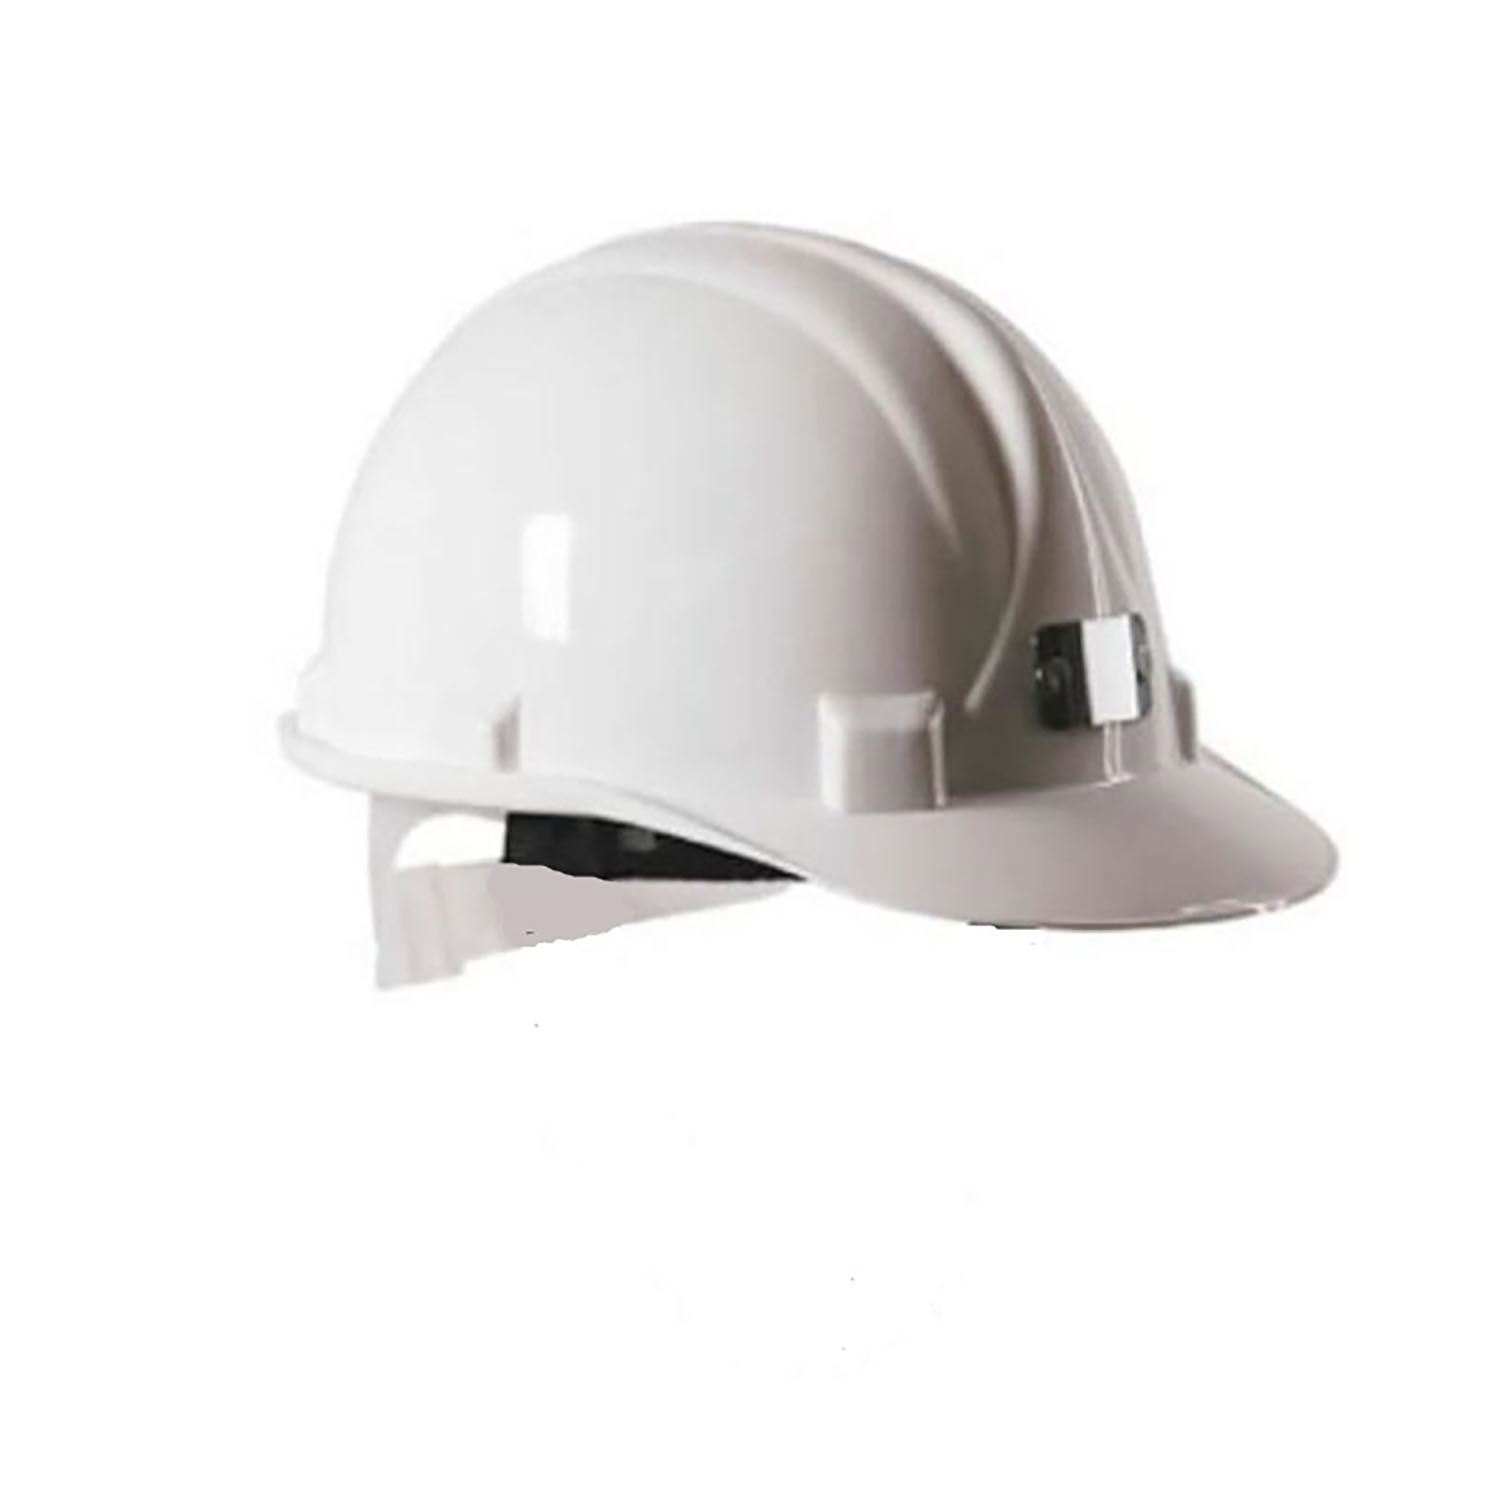 Miner’s Safety Helmet